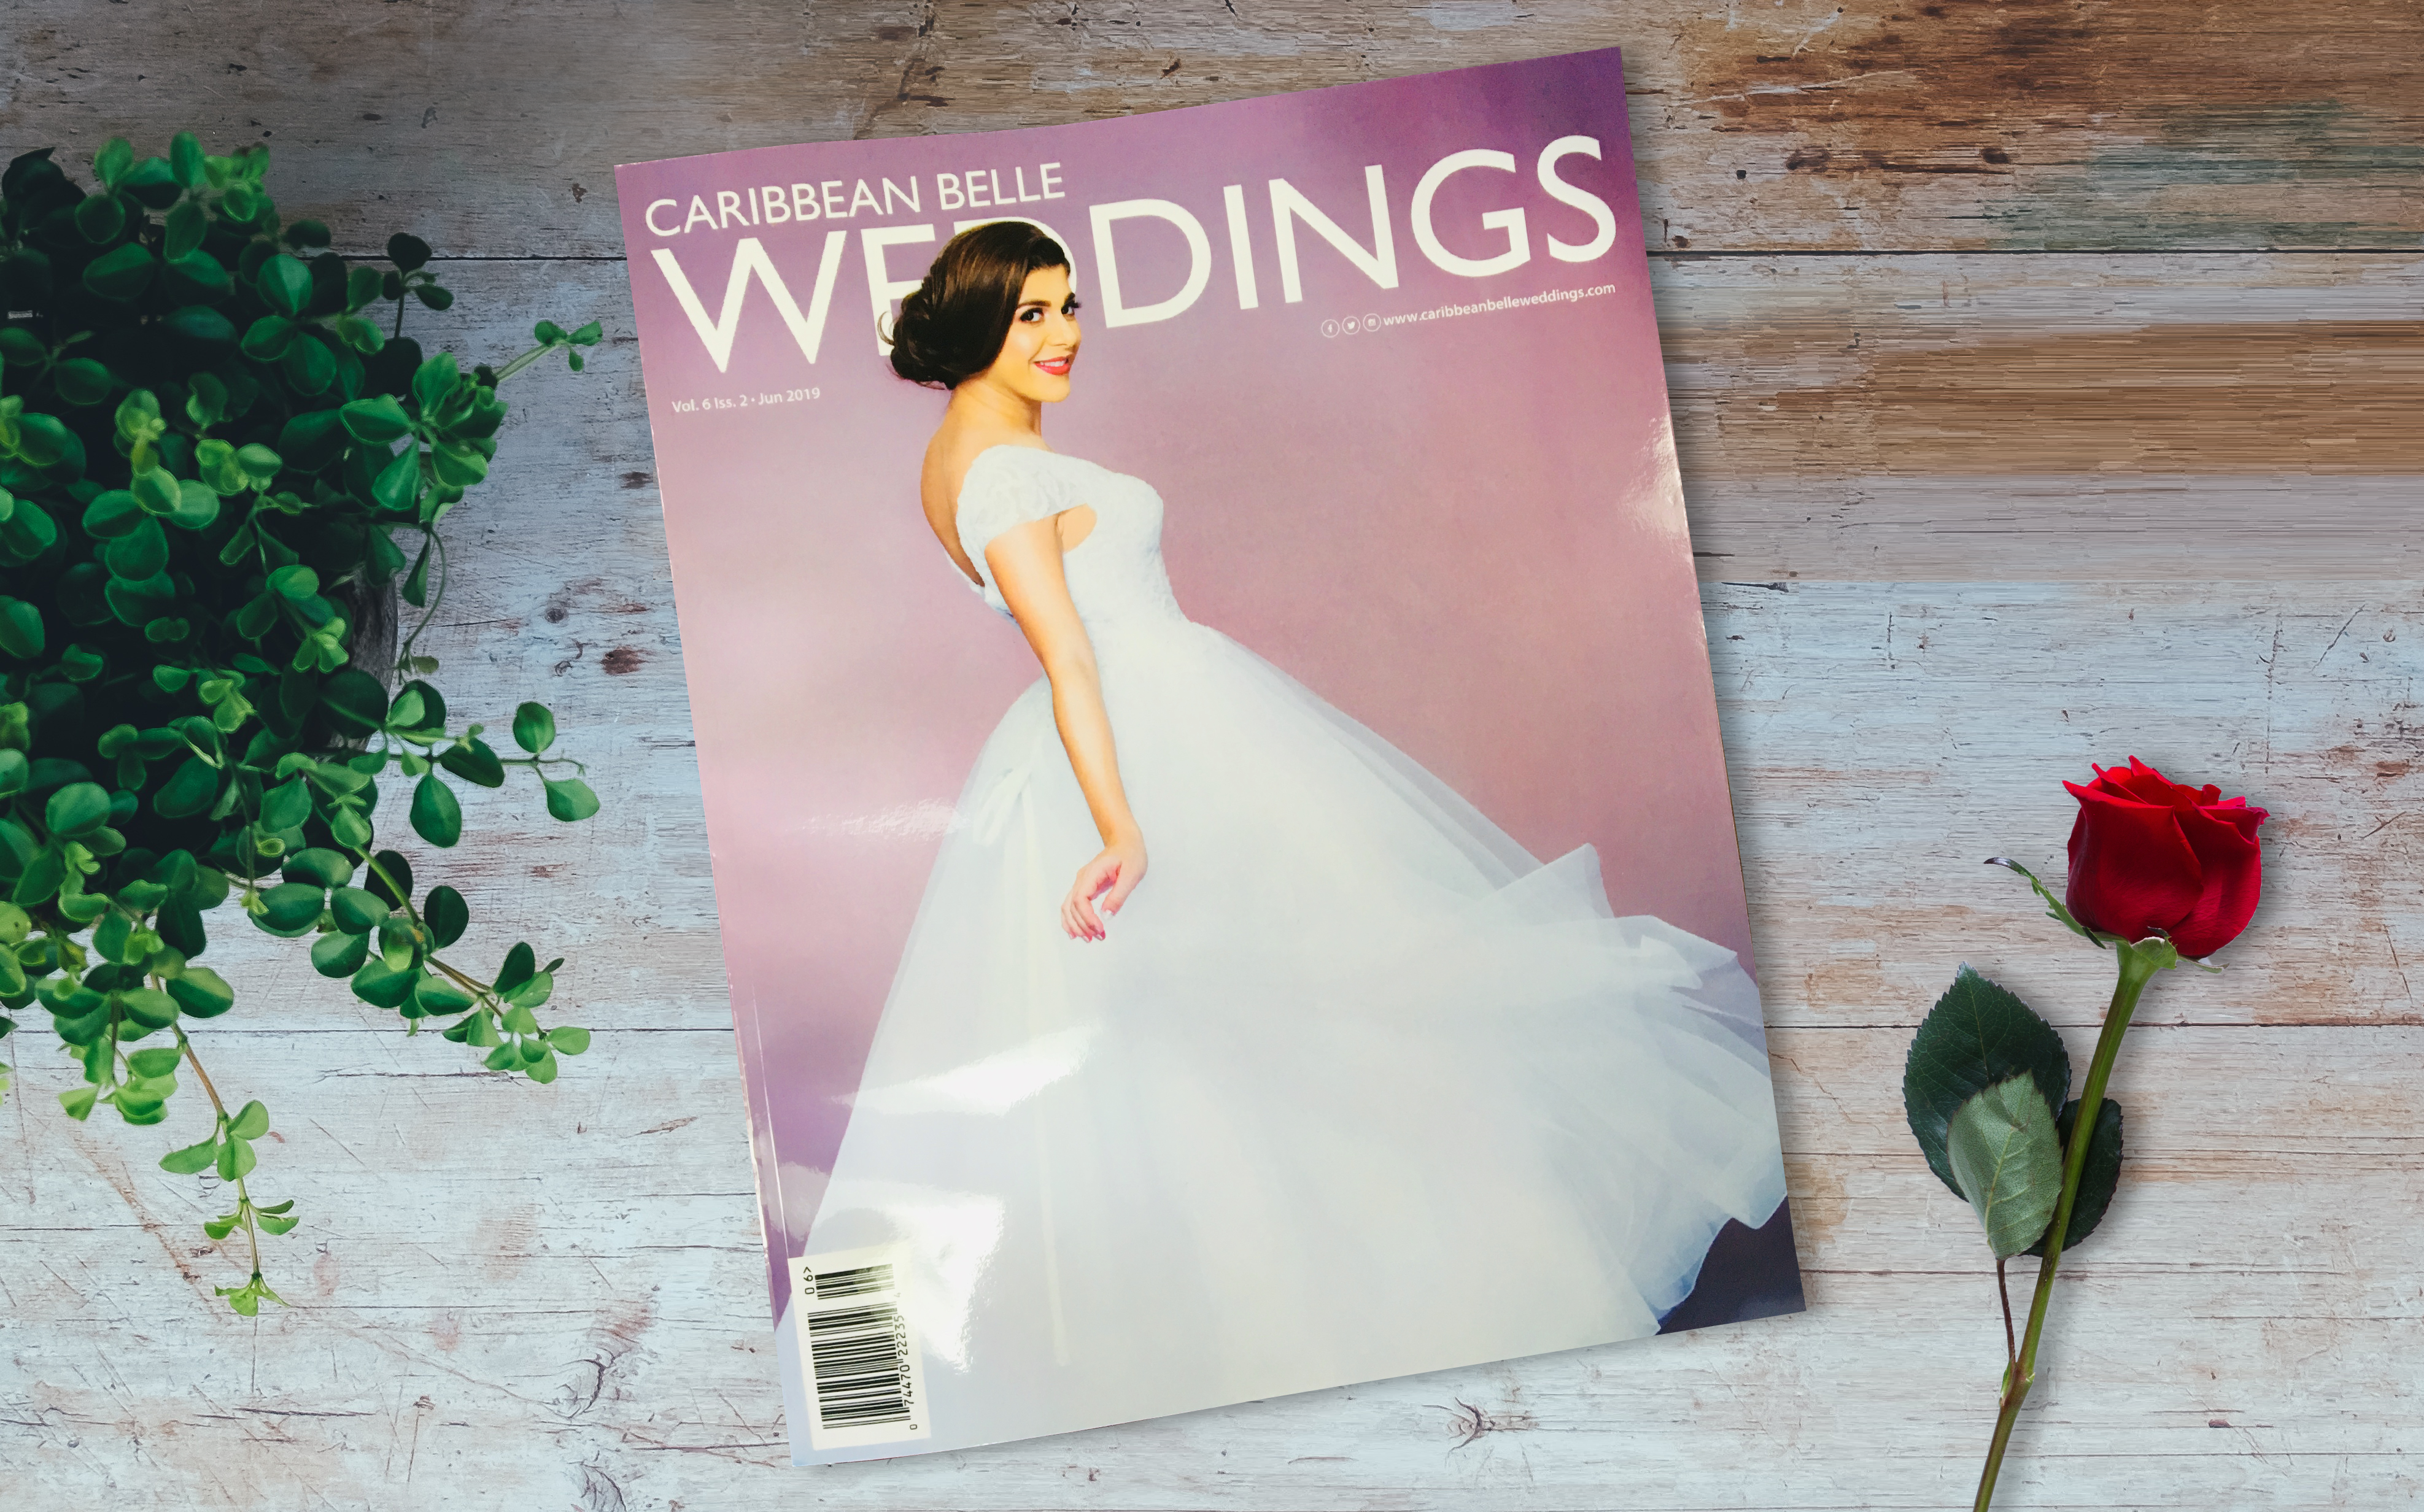 Caribbean Belle Weddings magazine - Vol 6 Iss 2